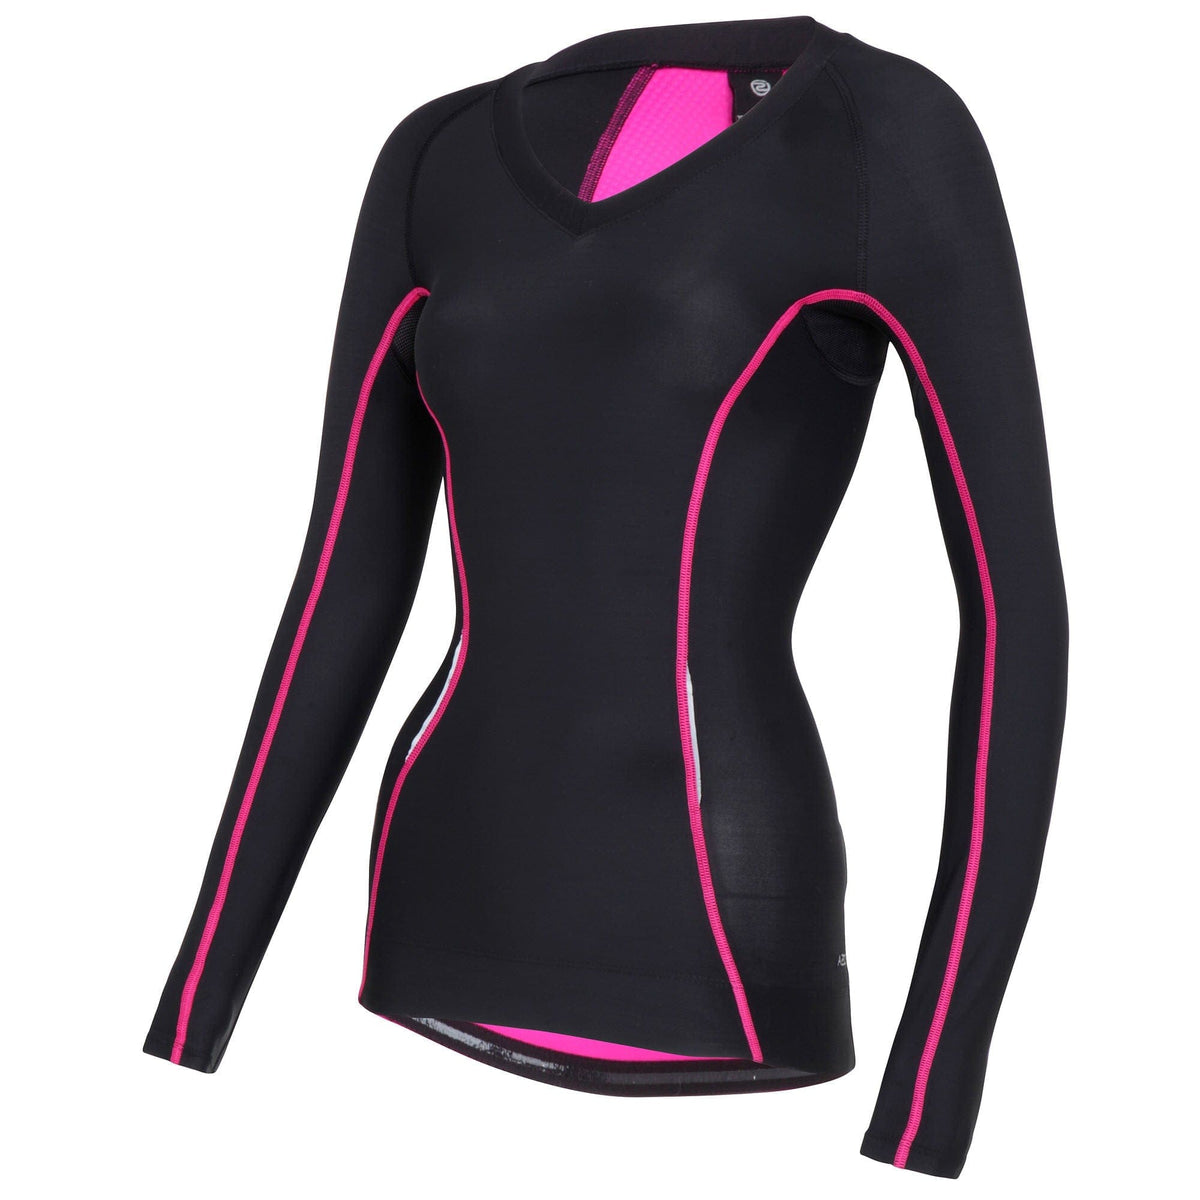 Skins A200 Compression Short Sleeve Shirt women (black / pink) buy che